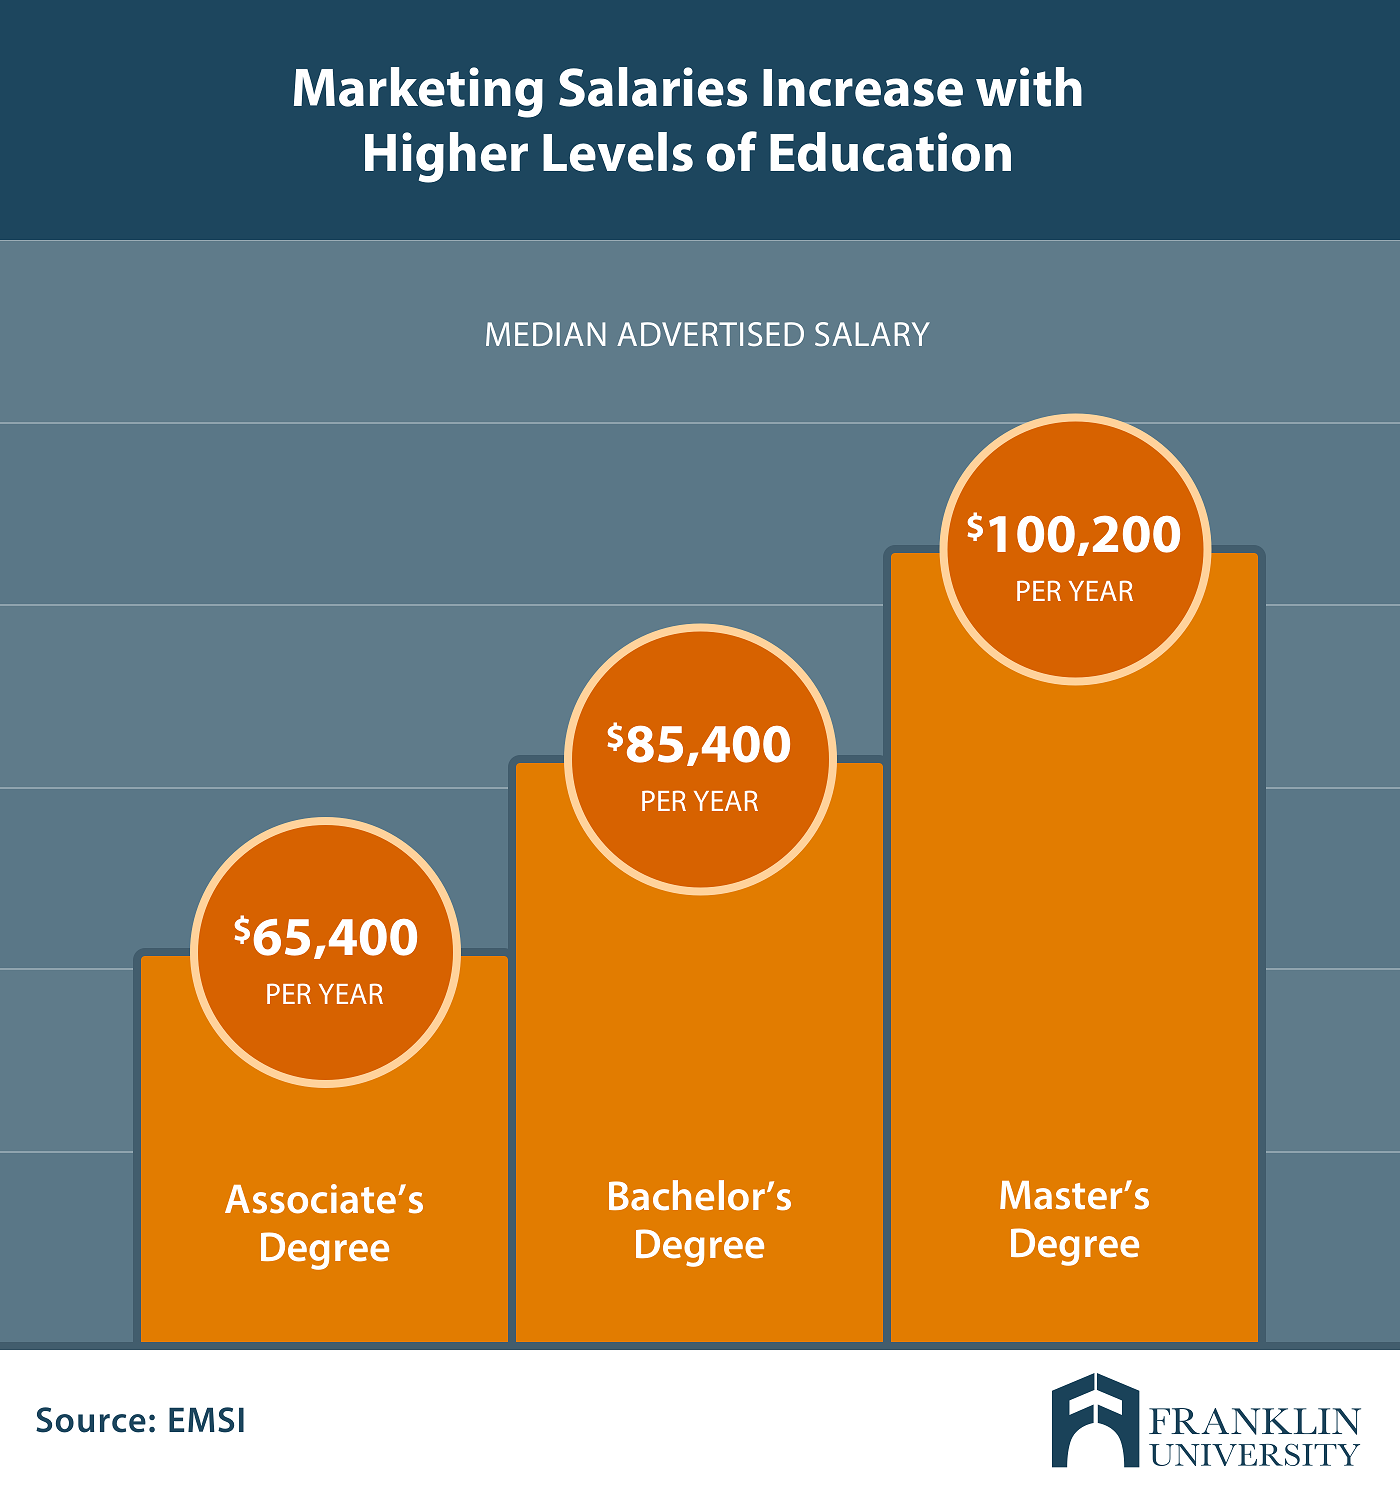 mba marketing salaries in us - image source franklin.edu